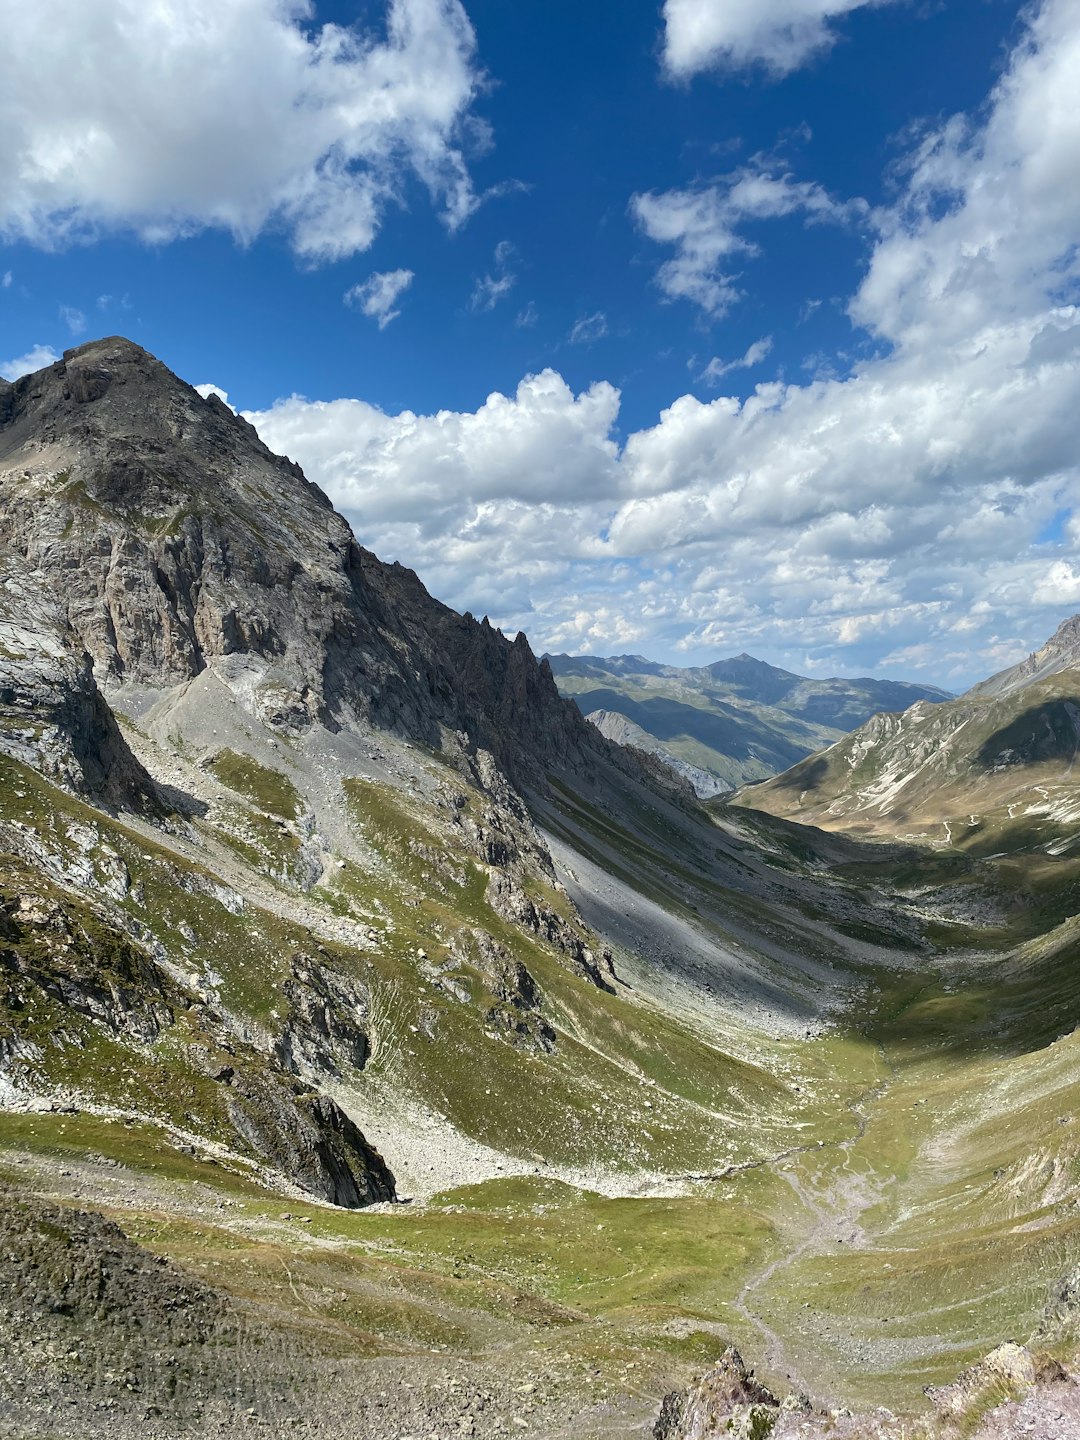 Highland photo spot Col du Galibier (2642m) Alpe d'Huez